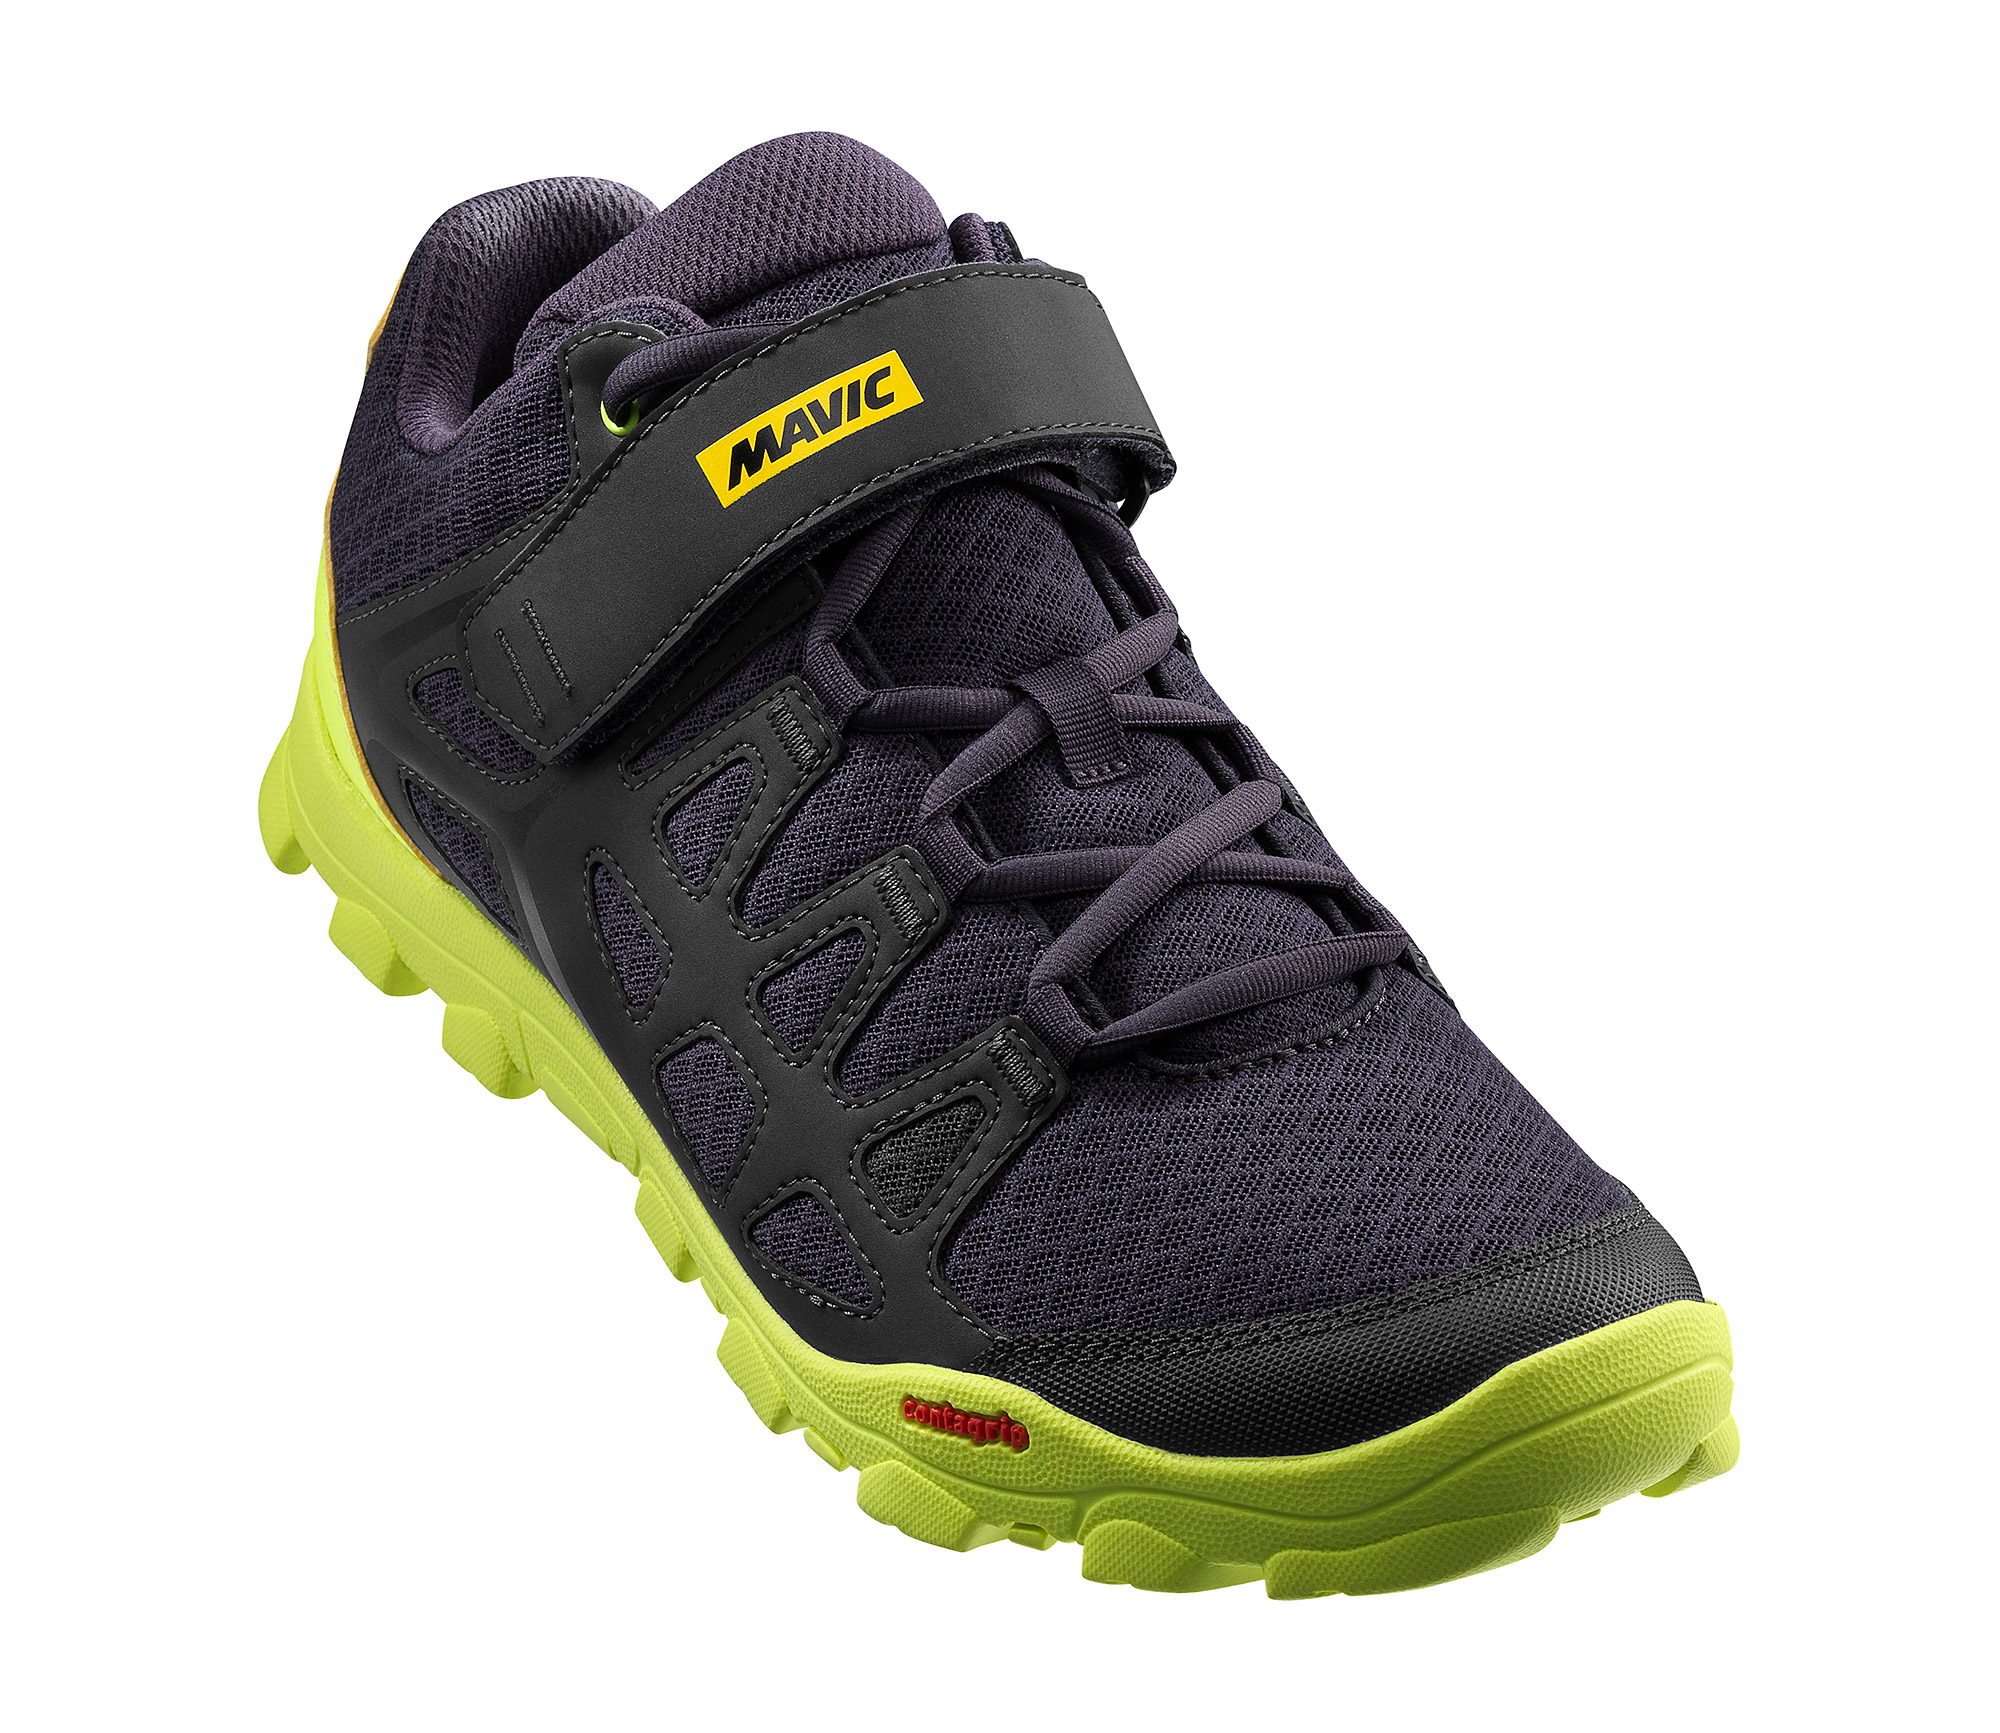 Взуття Mavic CROSSRIDE, розмір UK 7,5 (41 1/3, 261мм) Pirate Black/Safety Yellow чорно-жовта